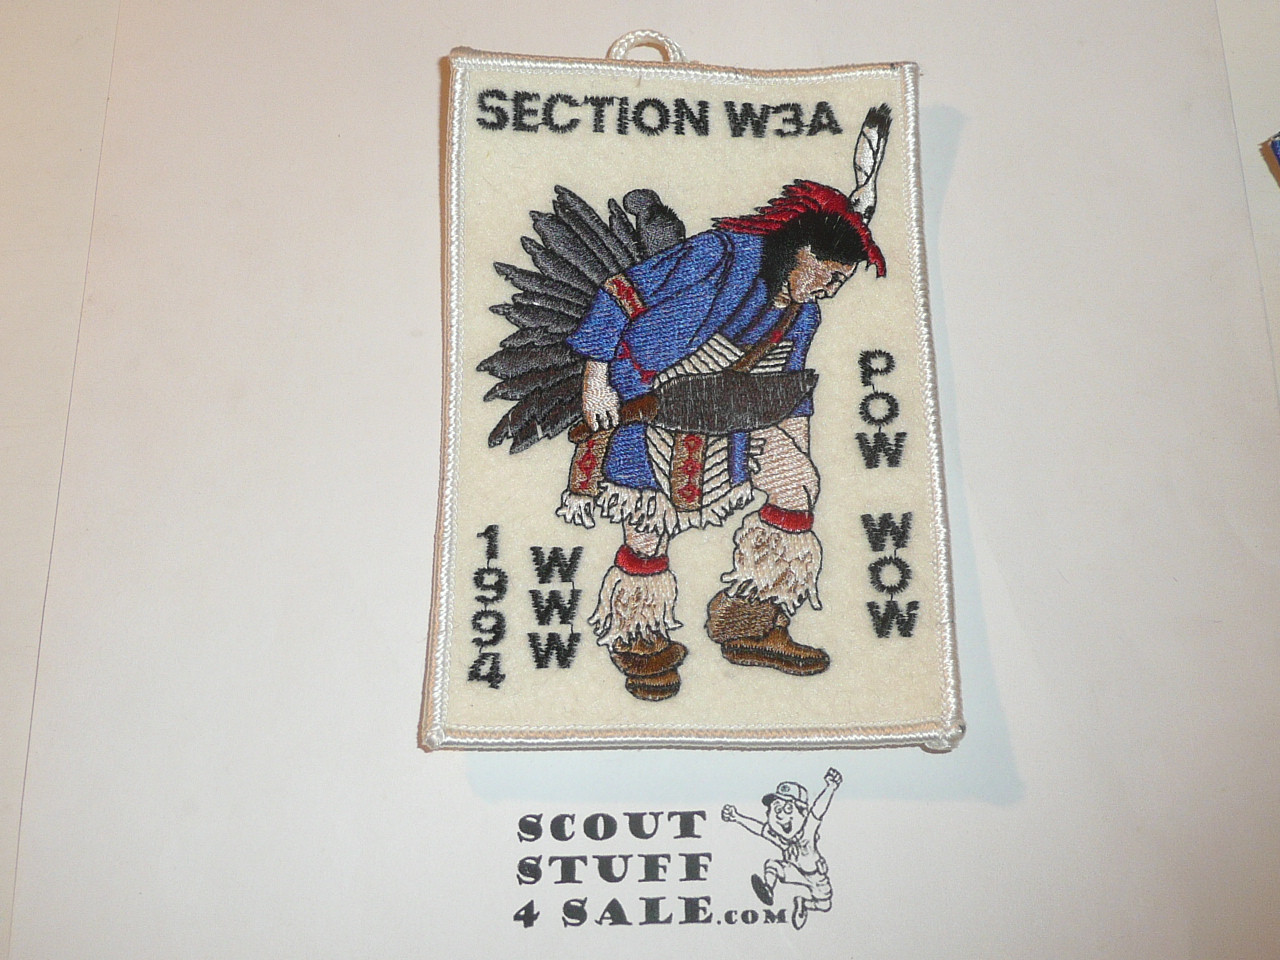 Section W3A 1994 O.A. Pow Wow Patch - Scout